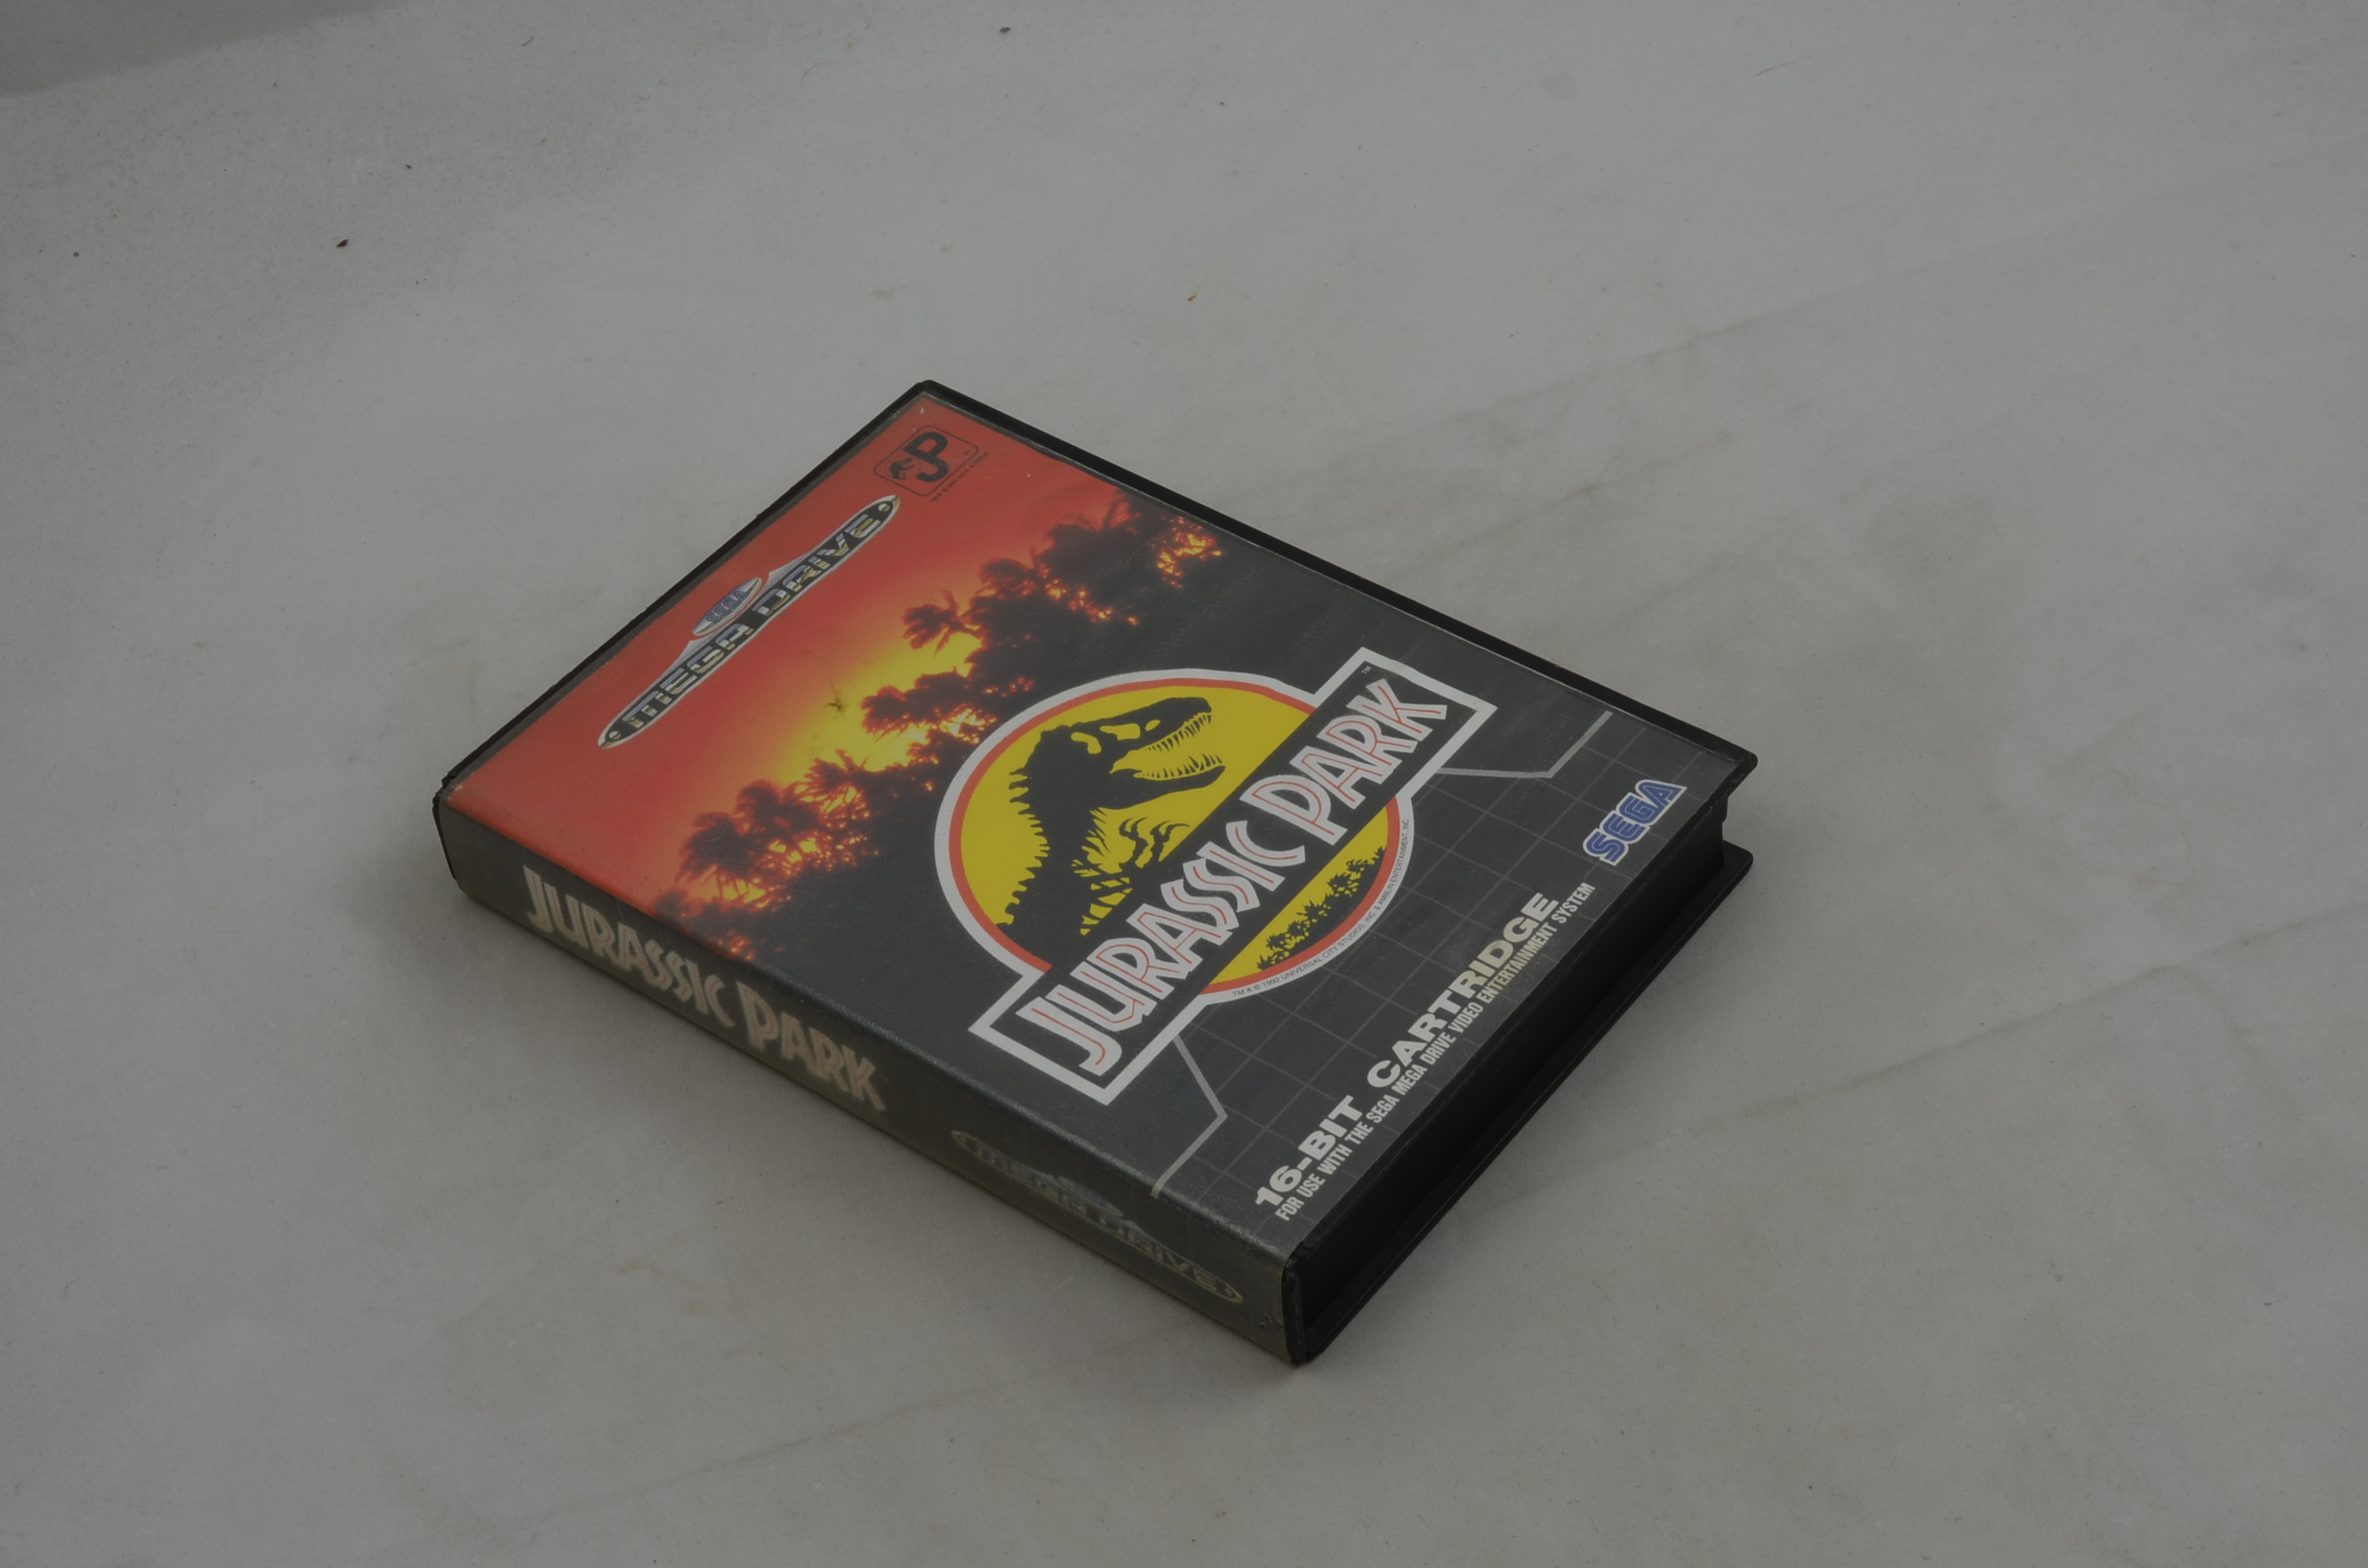 Produktbild von Jurassic Park Sega Mega Drive Spiel CIB (gut)